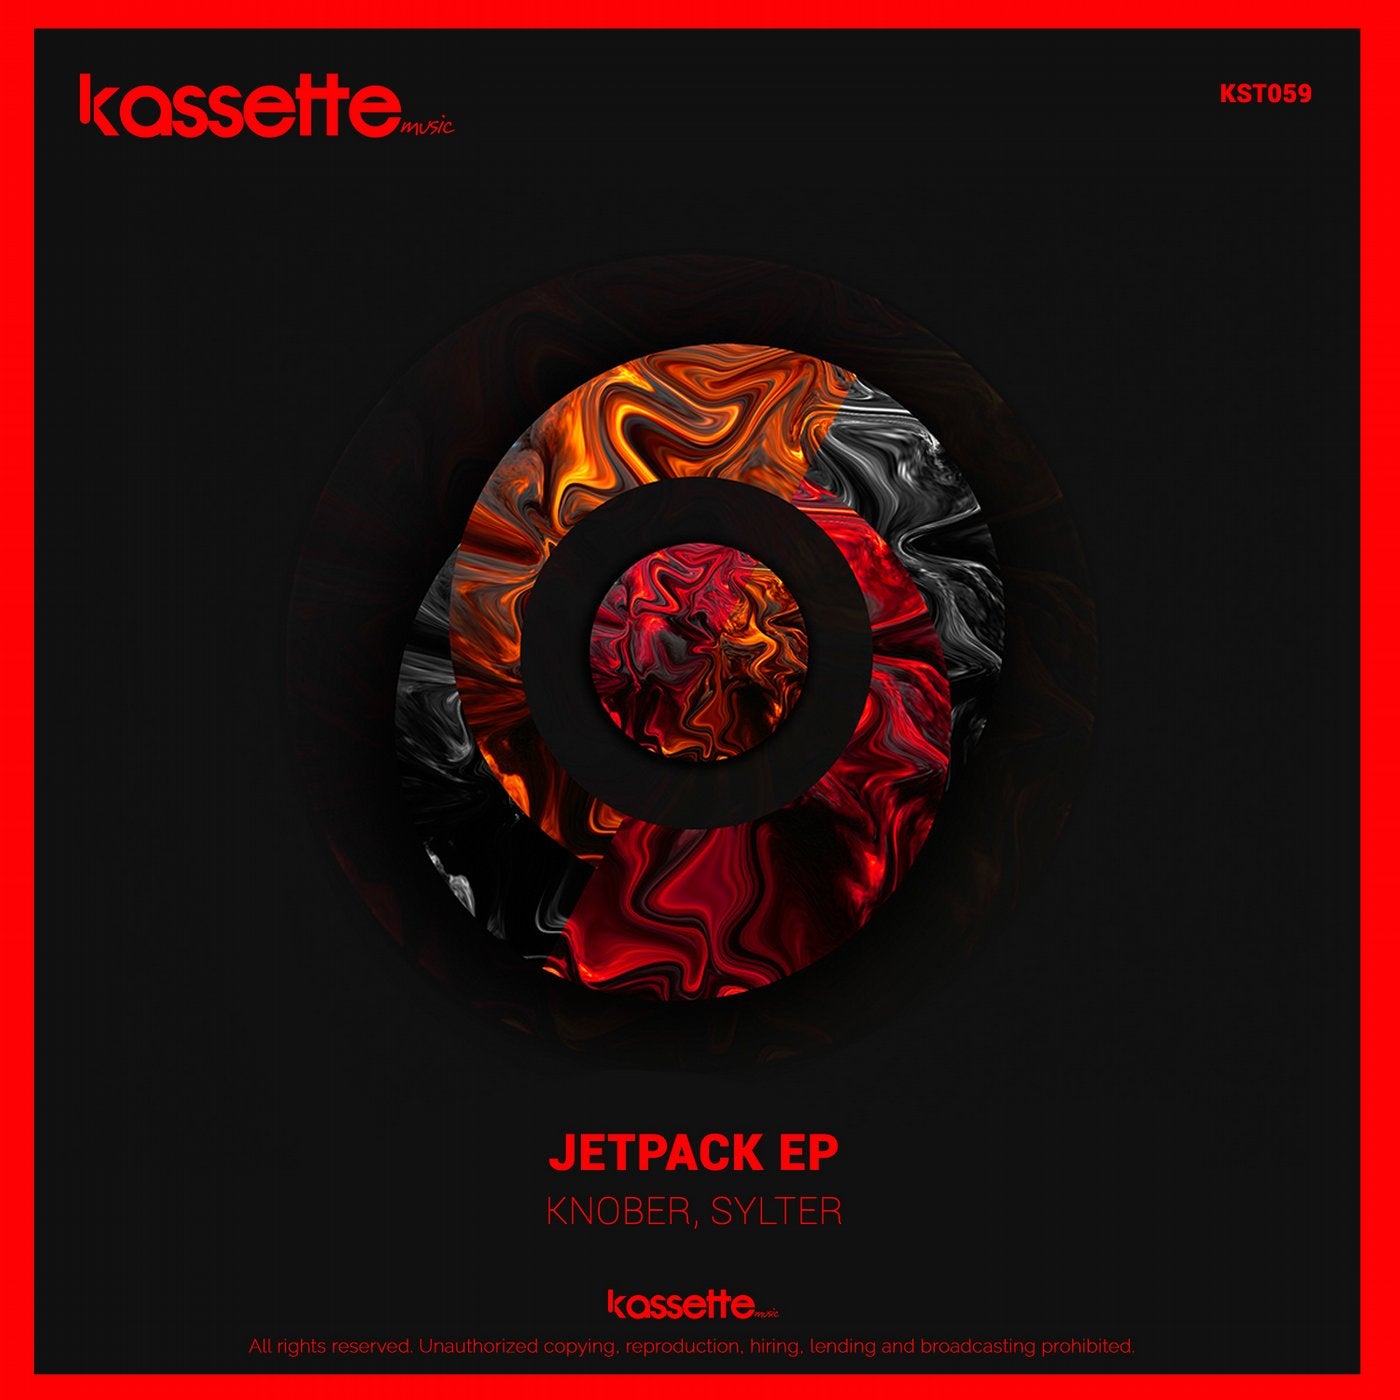 Jetpack EP